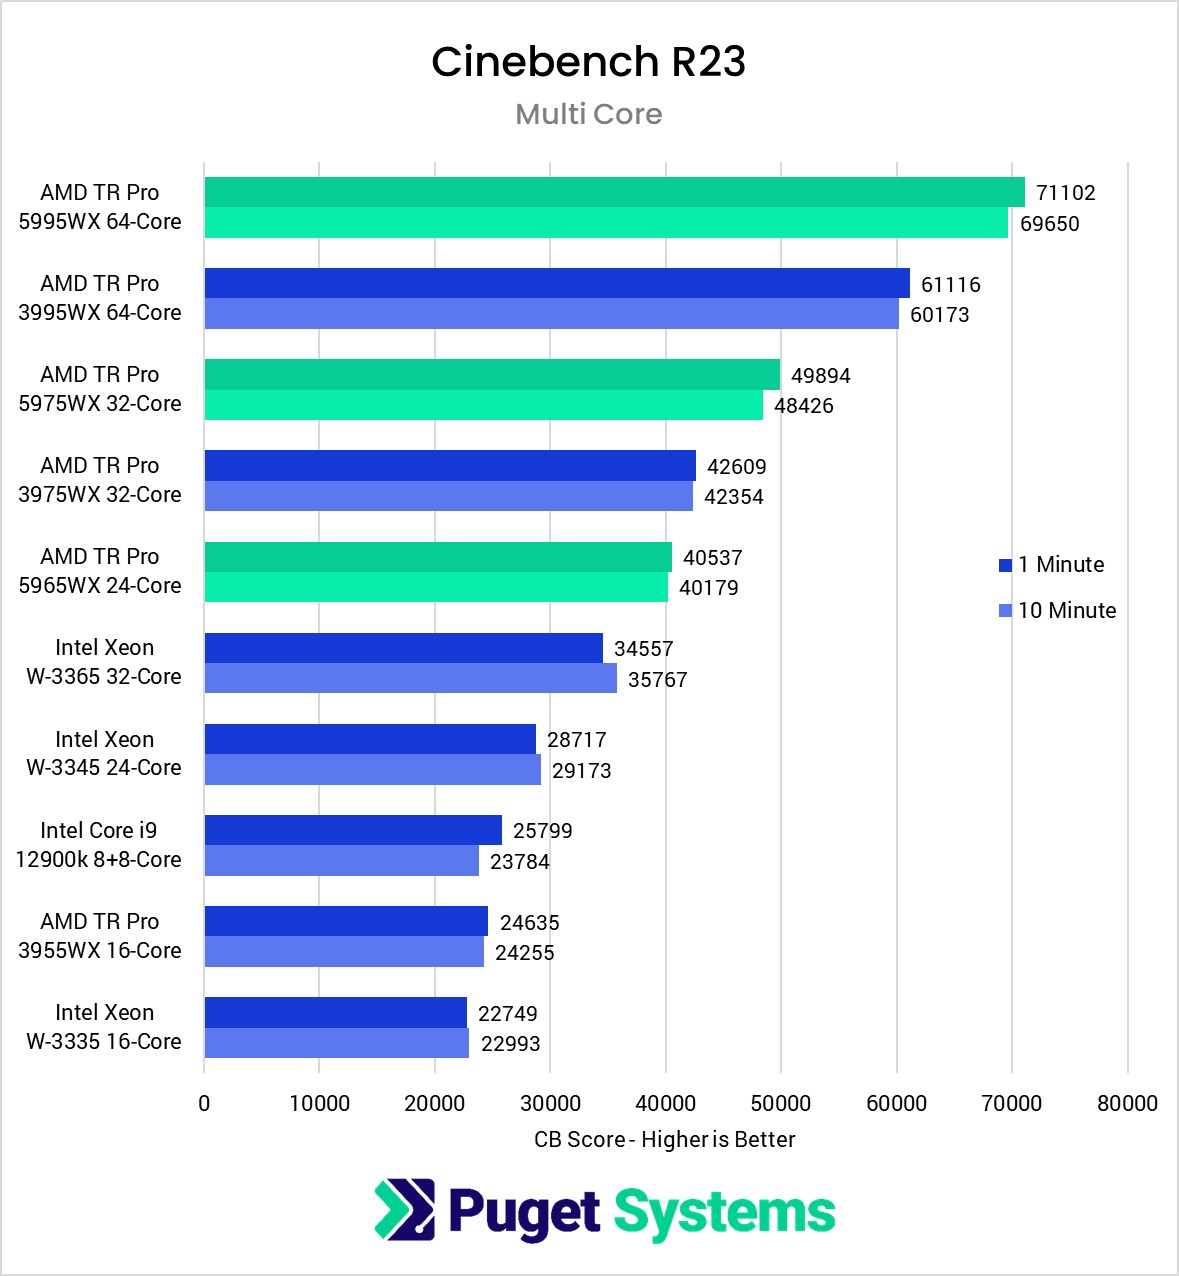 Cinebench R23 Multi Core CPU Performance